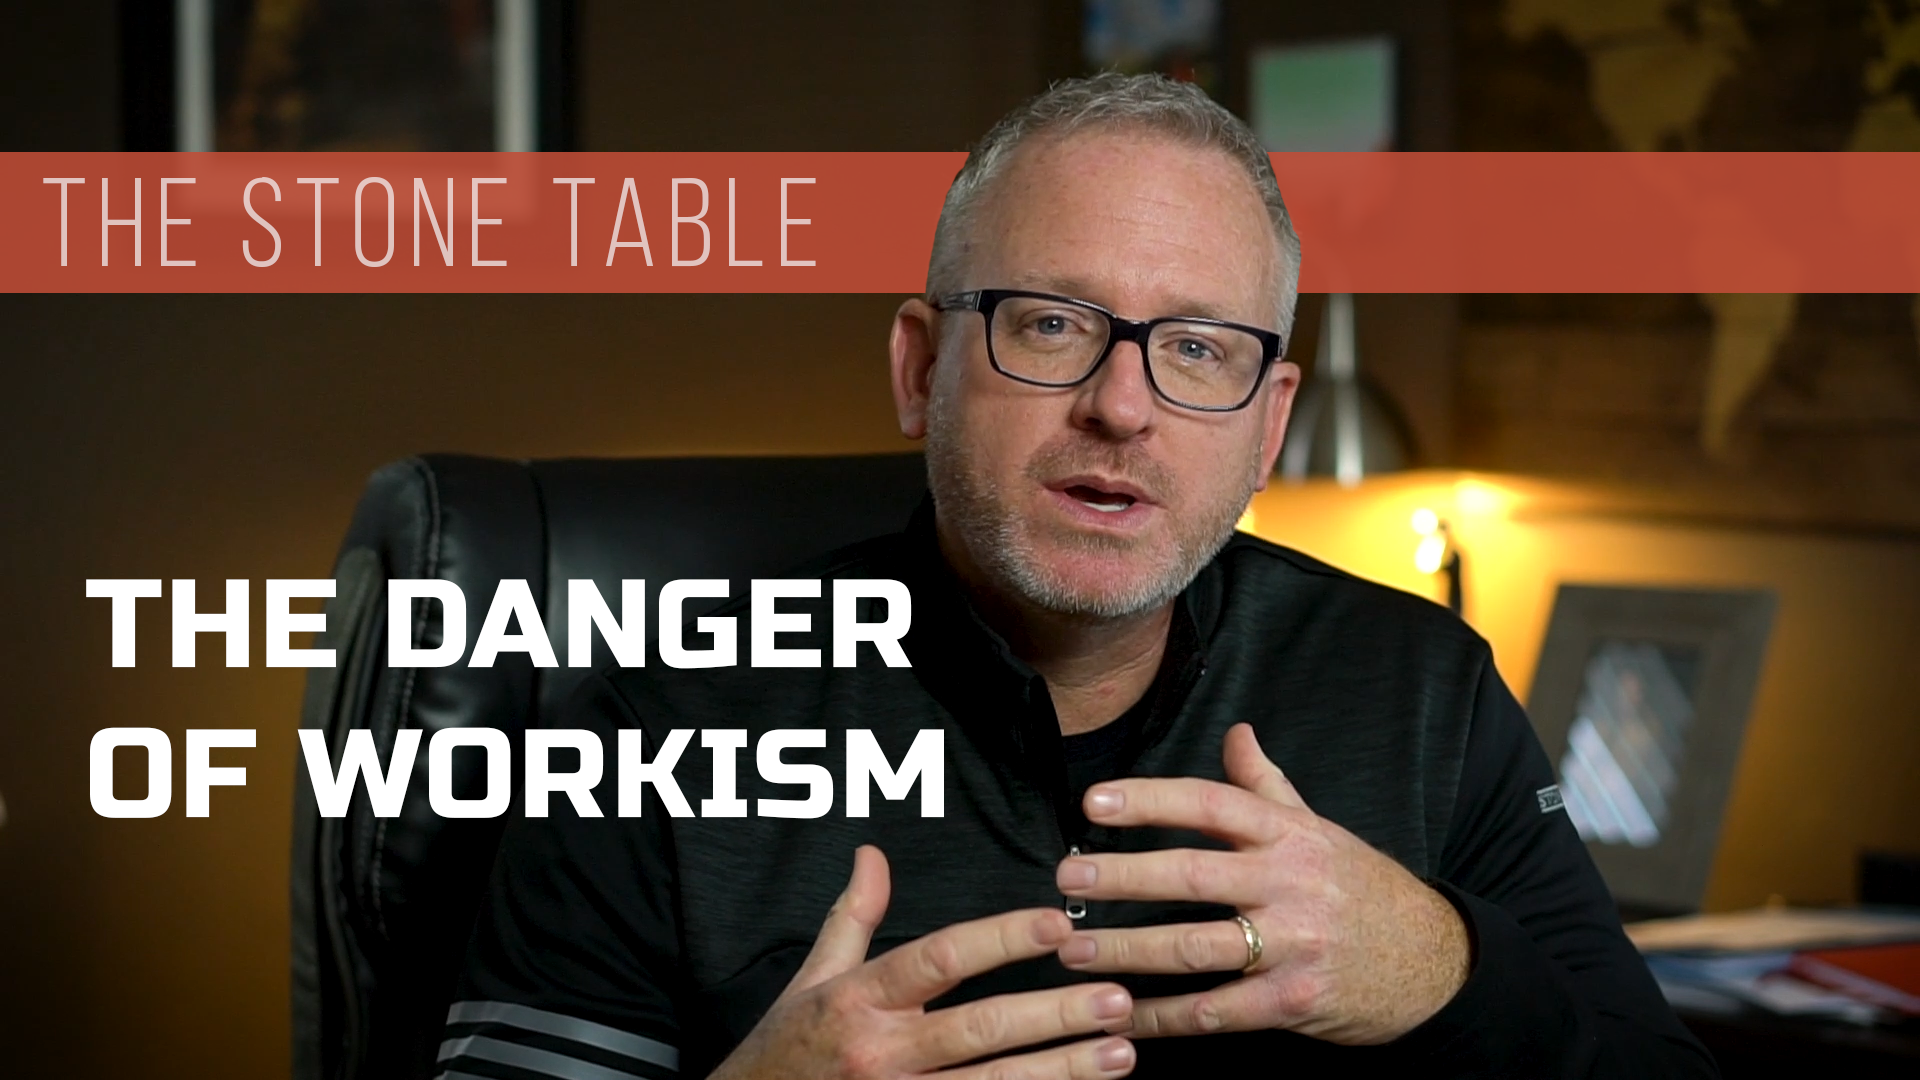 VIDEO: The Danger of Workism